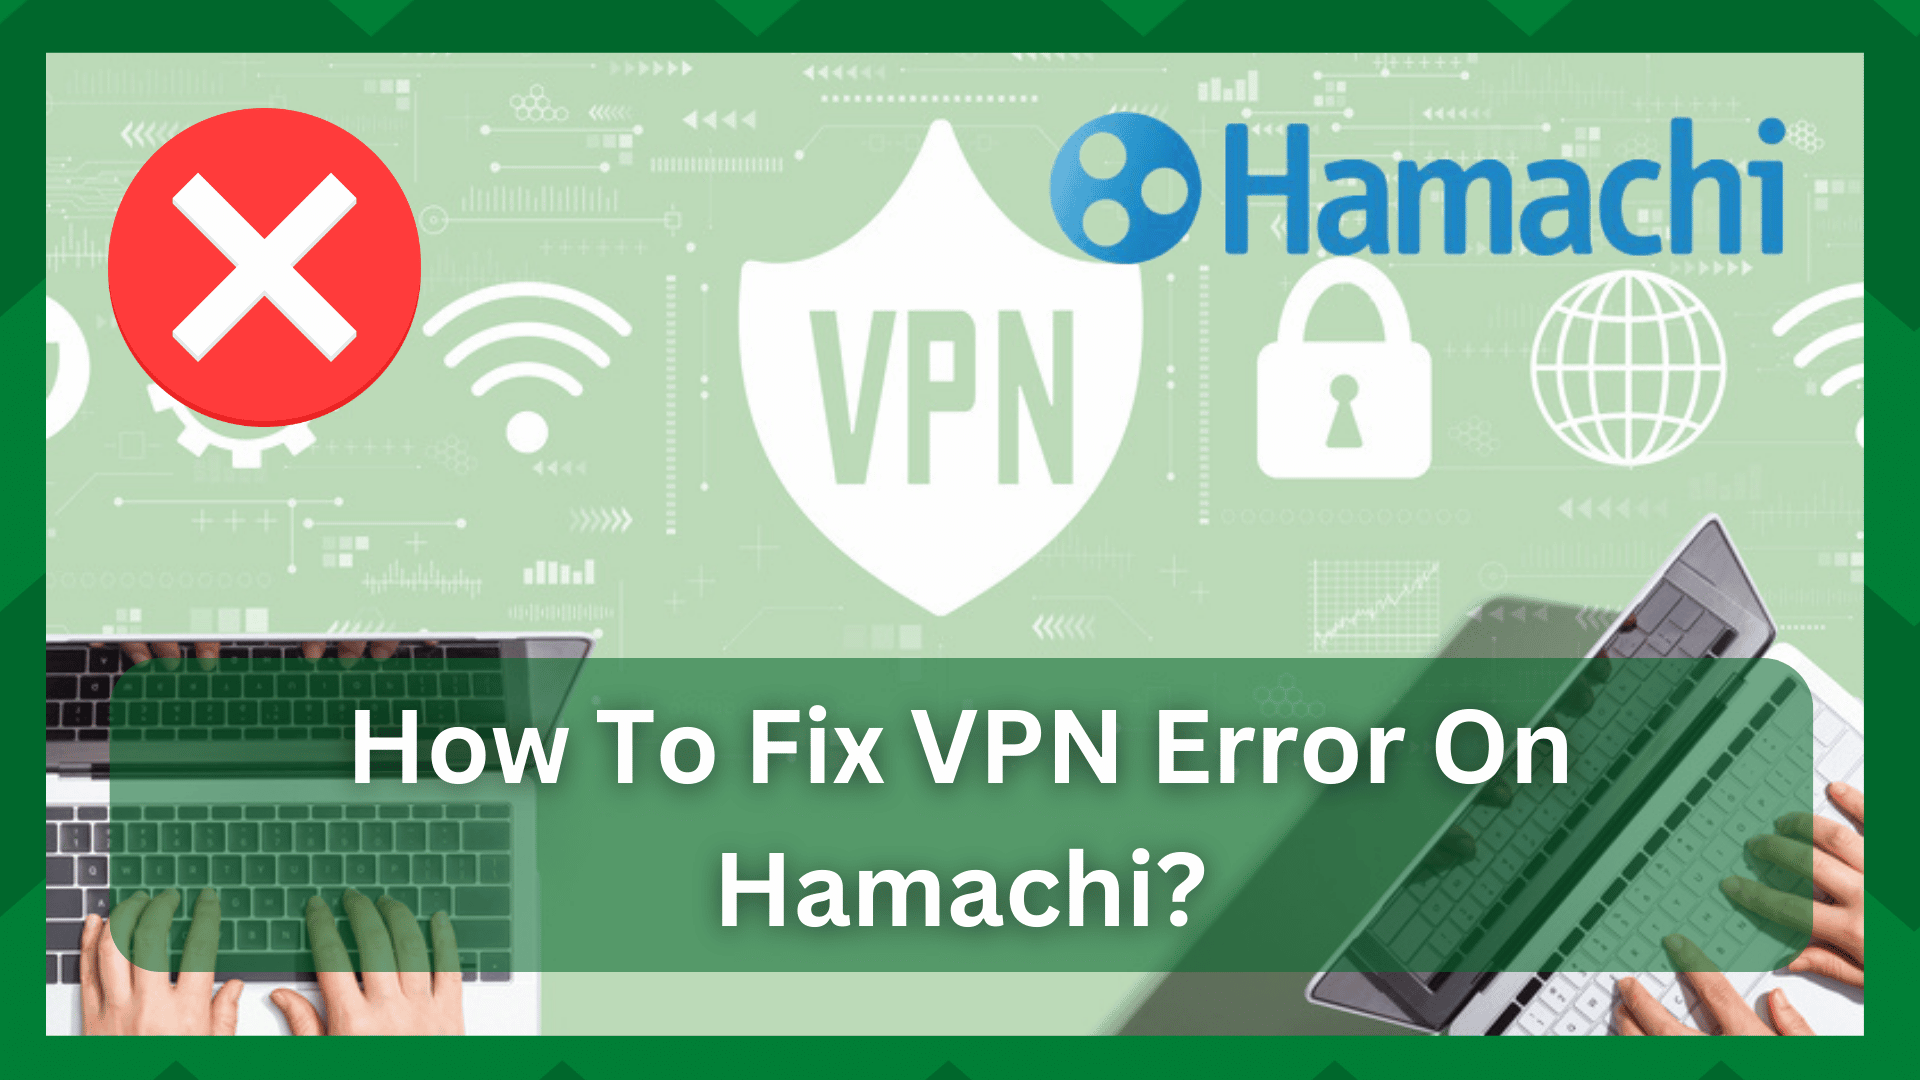 Director tunnel blockiert hamachi vpn policy based ipsec vpn definition